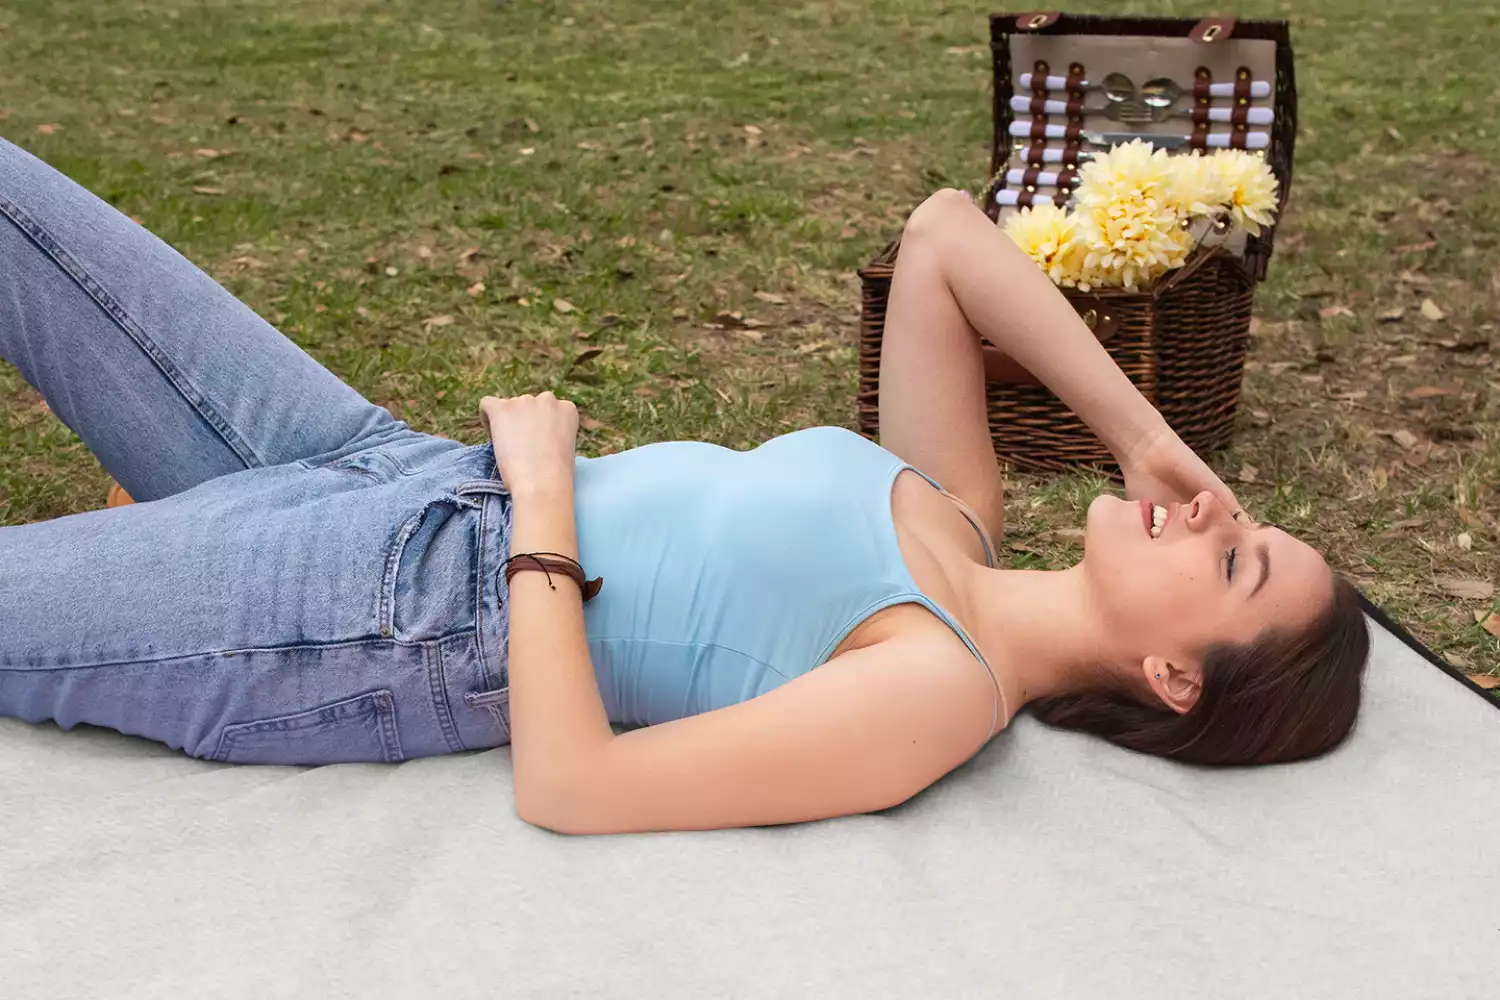 cutest picnic blanket